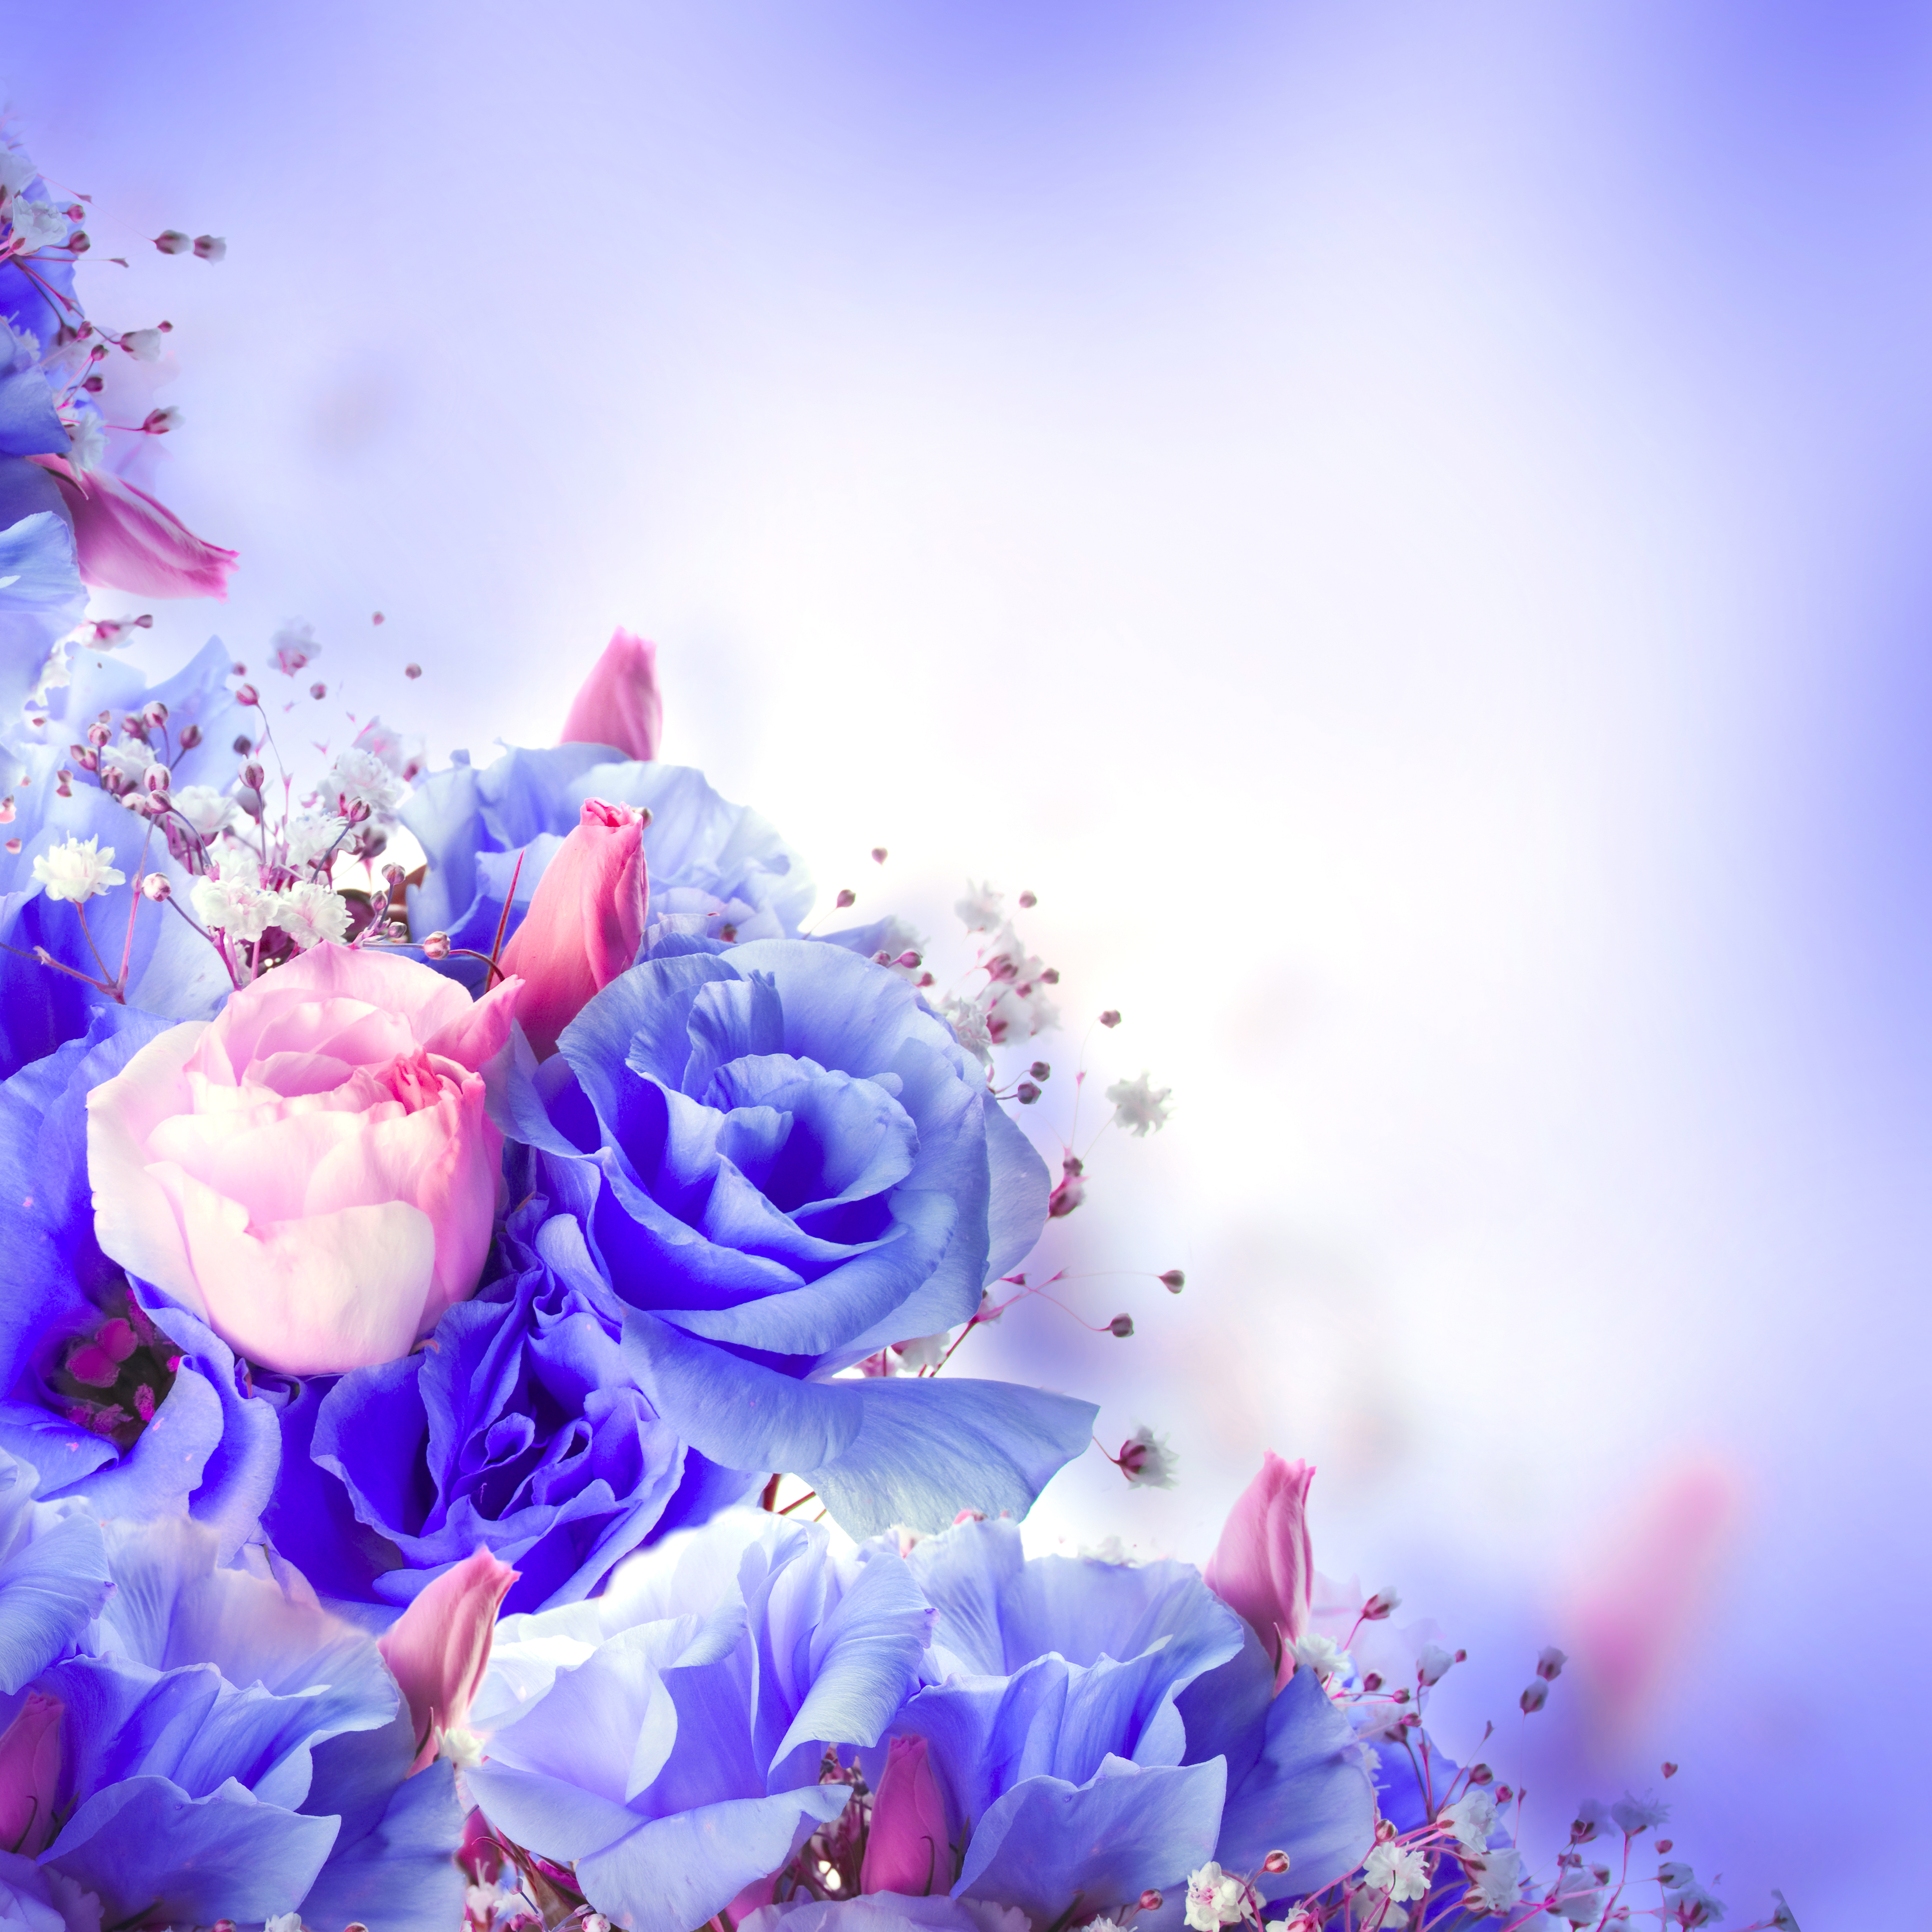 Картина с синими розами · бесплатное фото